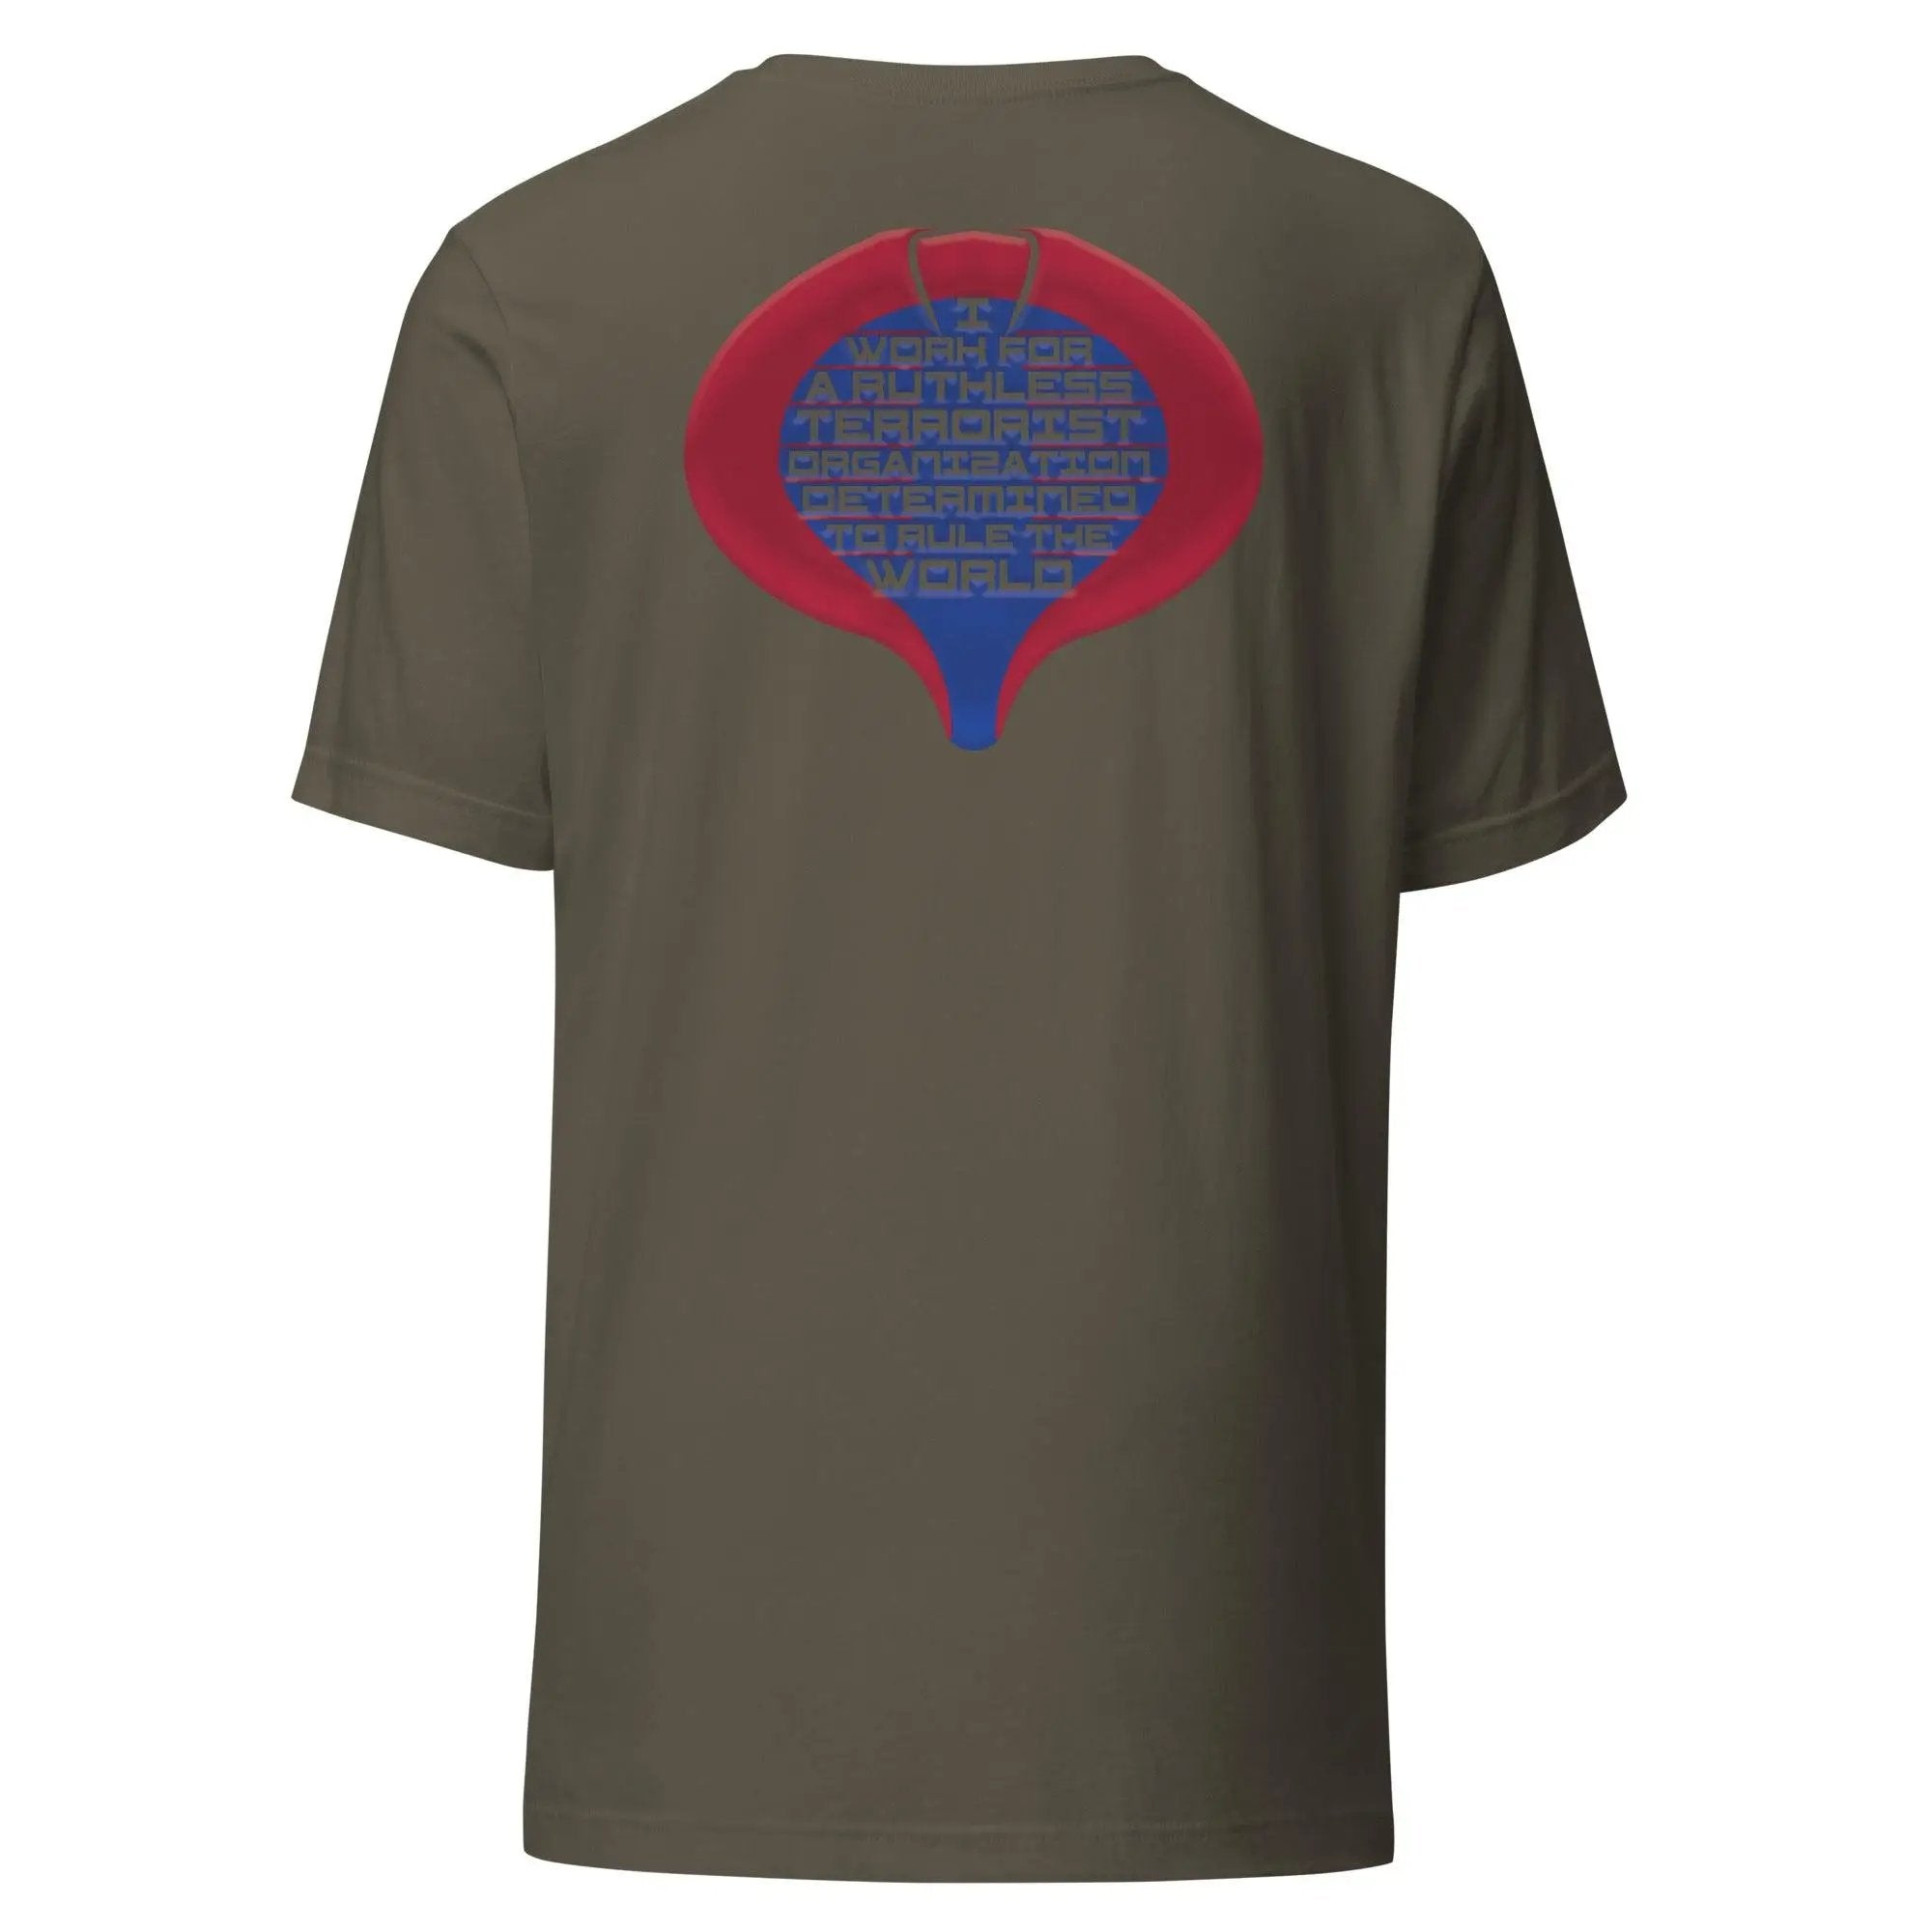 Cobra Work Shirt Unisex (Back) T-shirt